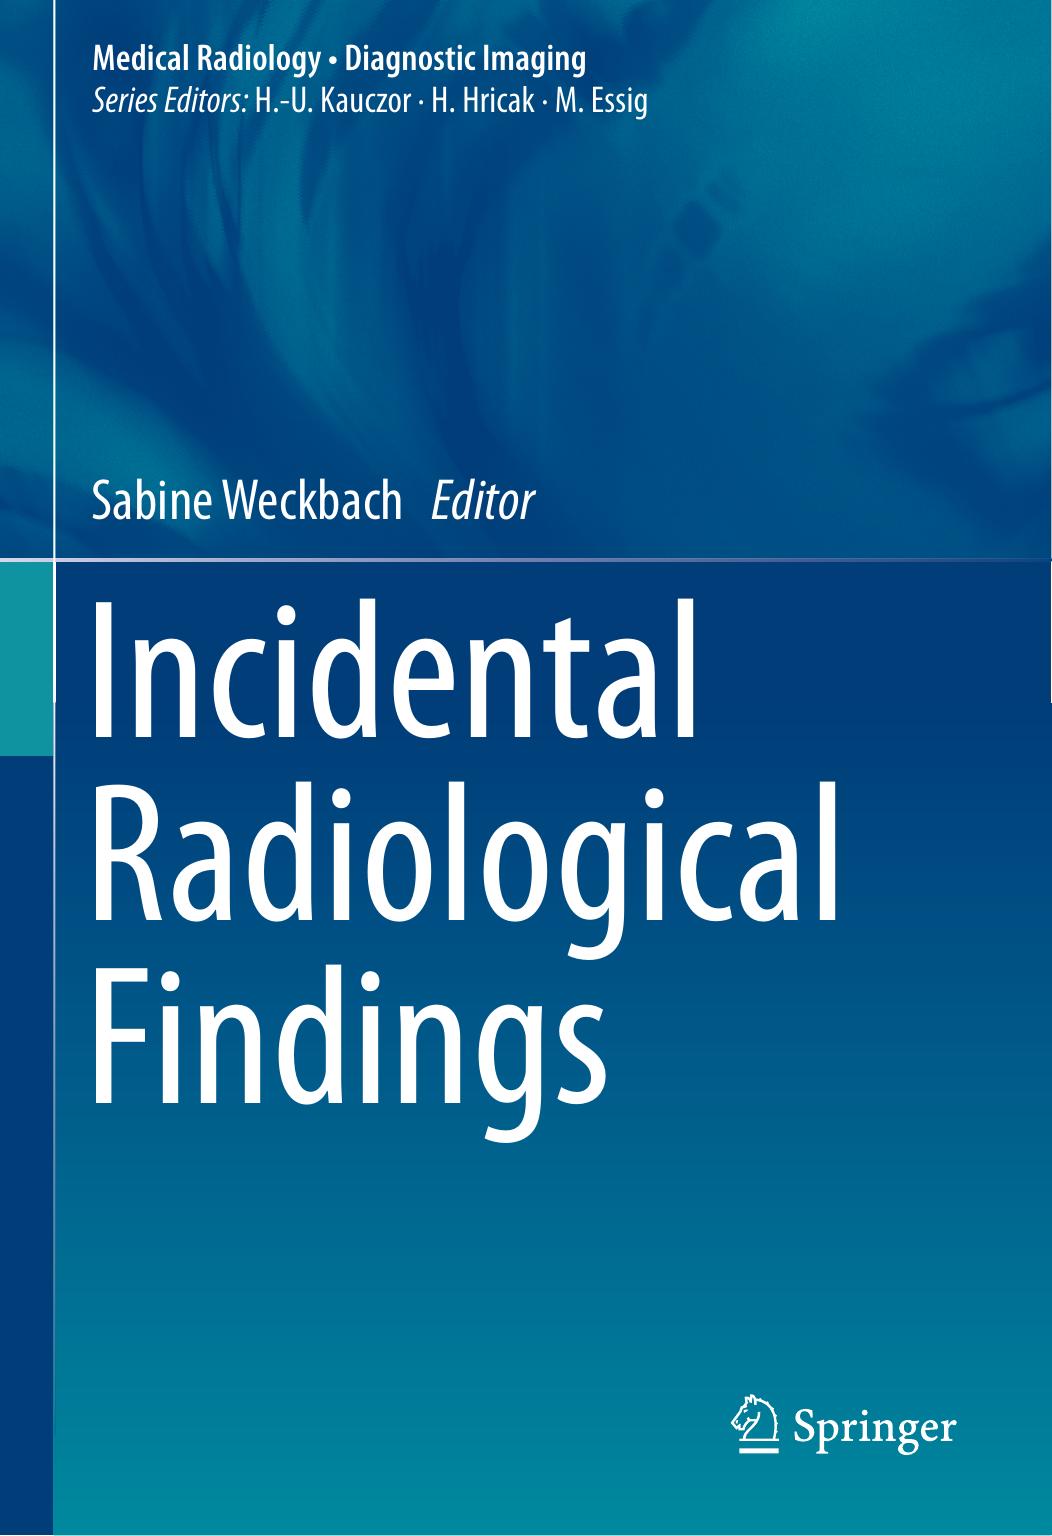 [Medical Radiology] Sabine Weckbach (eds.)